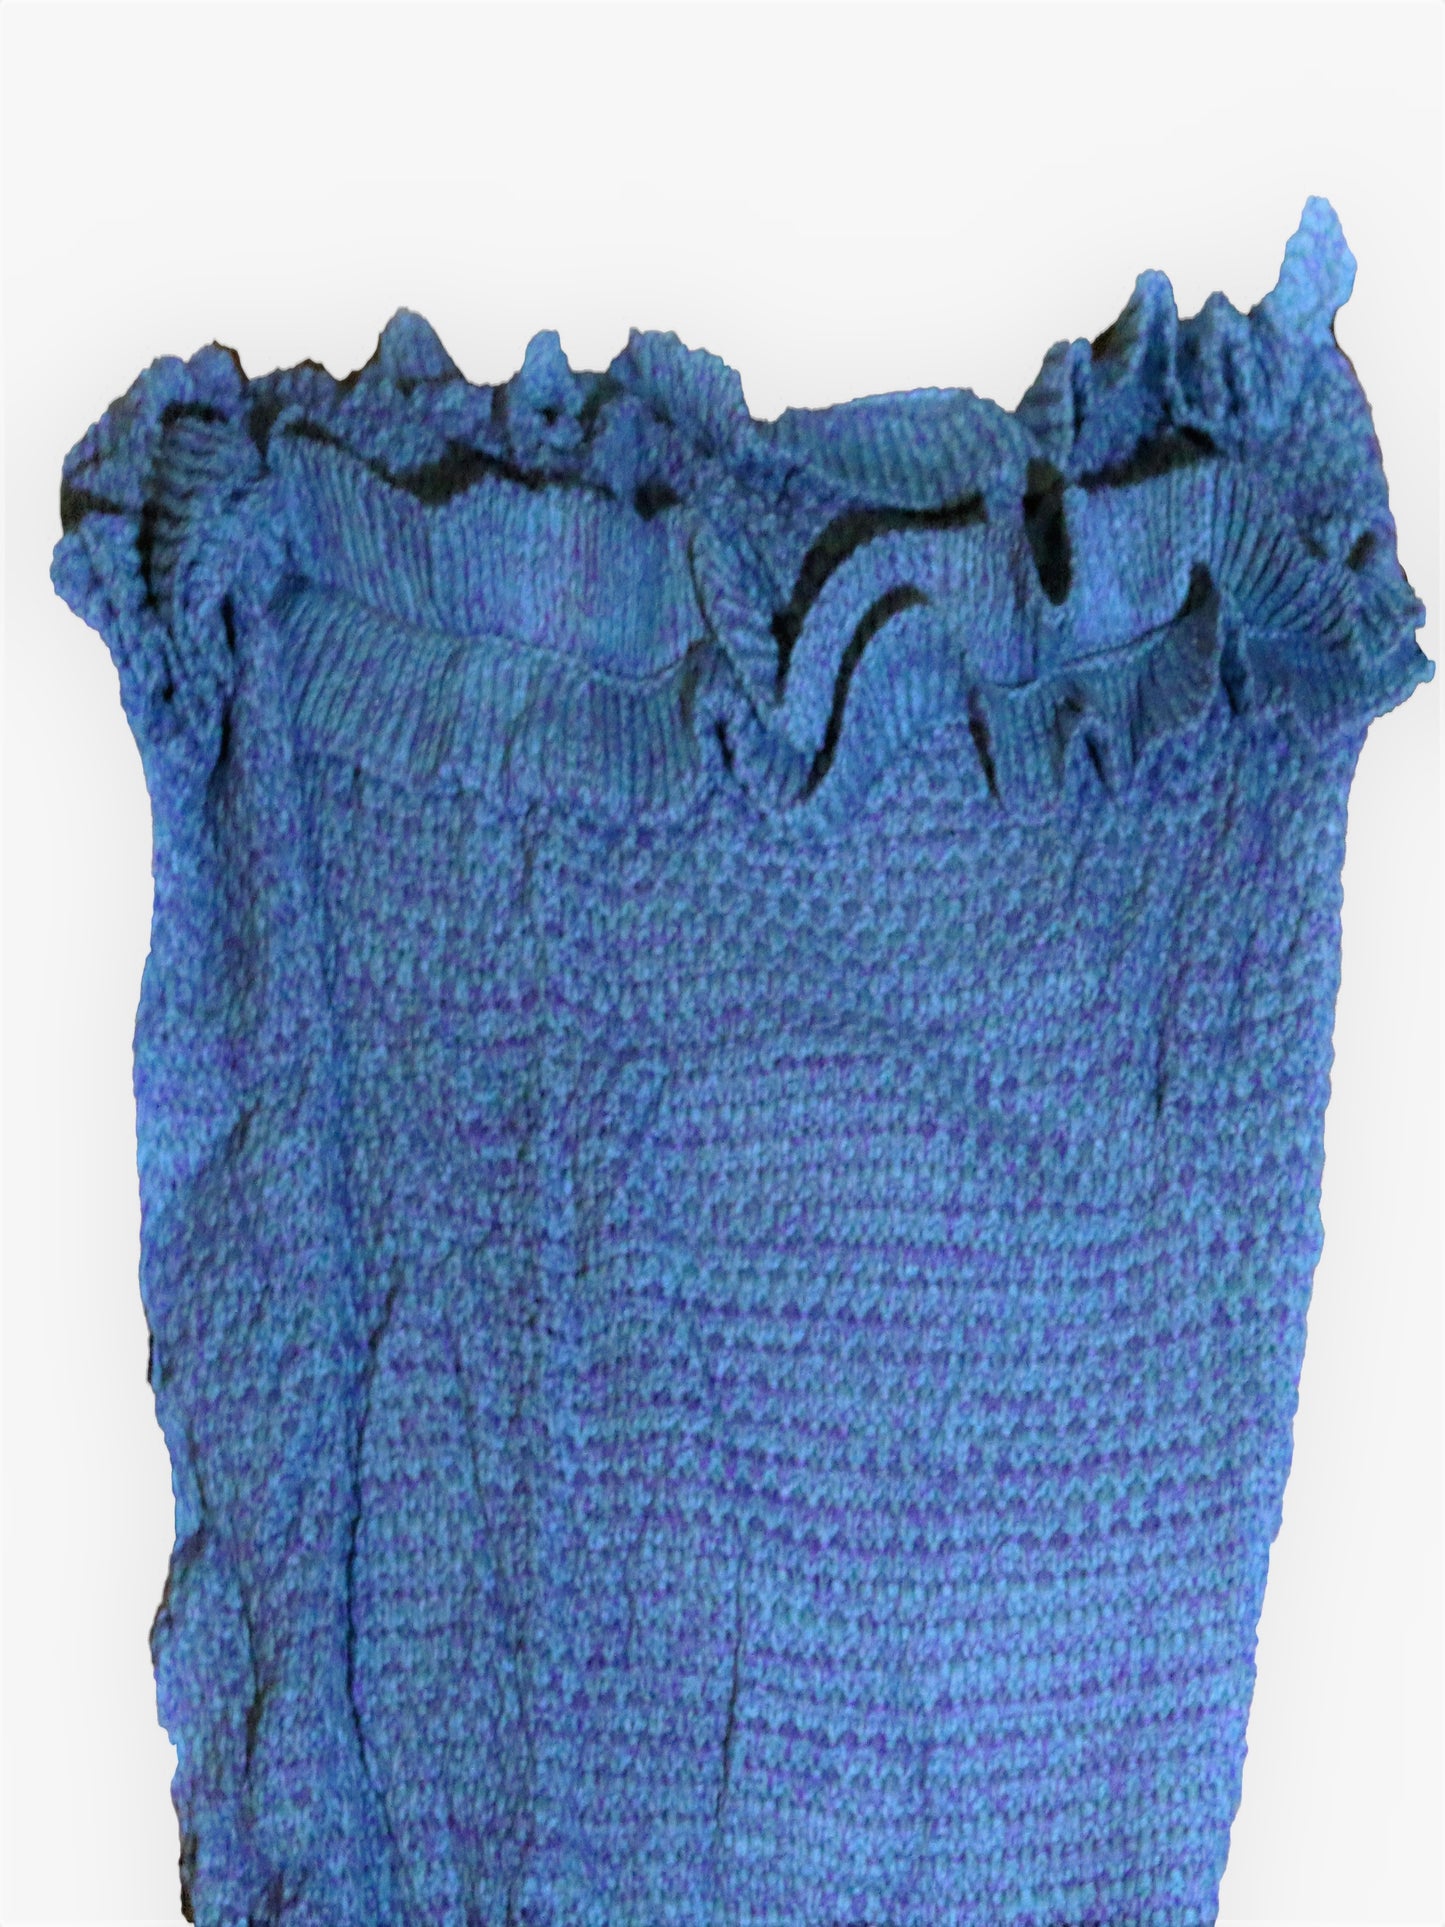 Crochet Teen/Adult Mermaid Tail Blanket Ruffle Top Blue-Purple